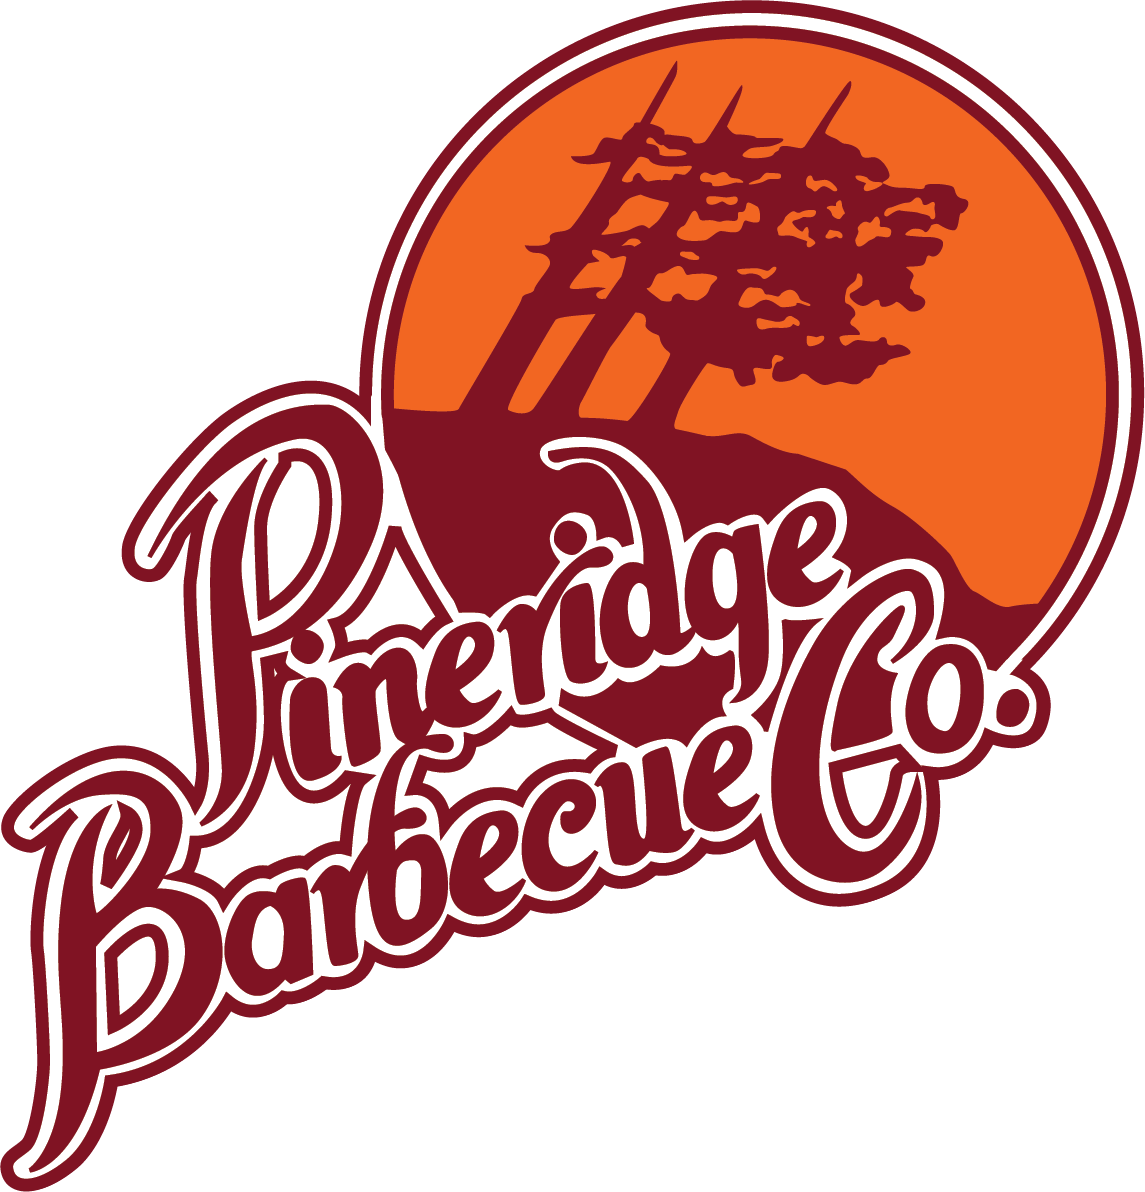 Pineridge Barbeque Co.